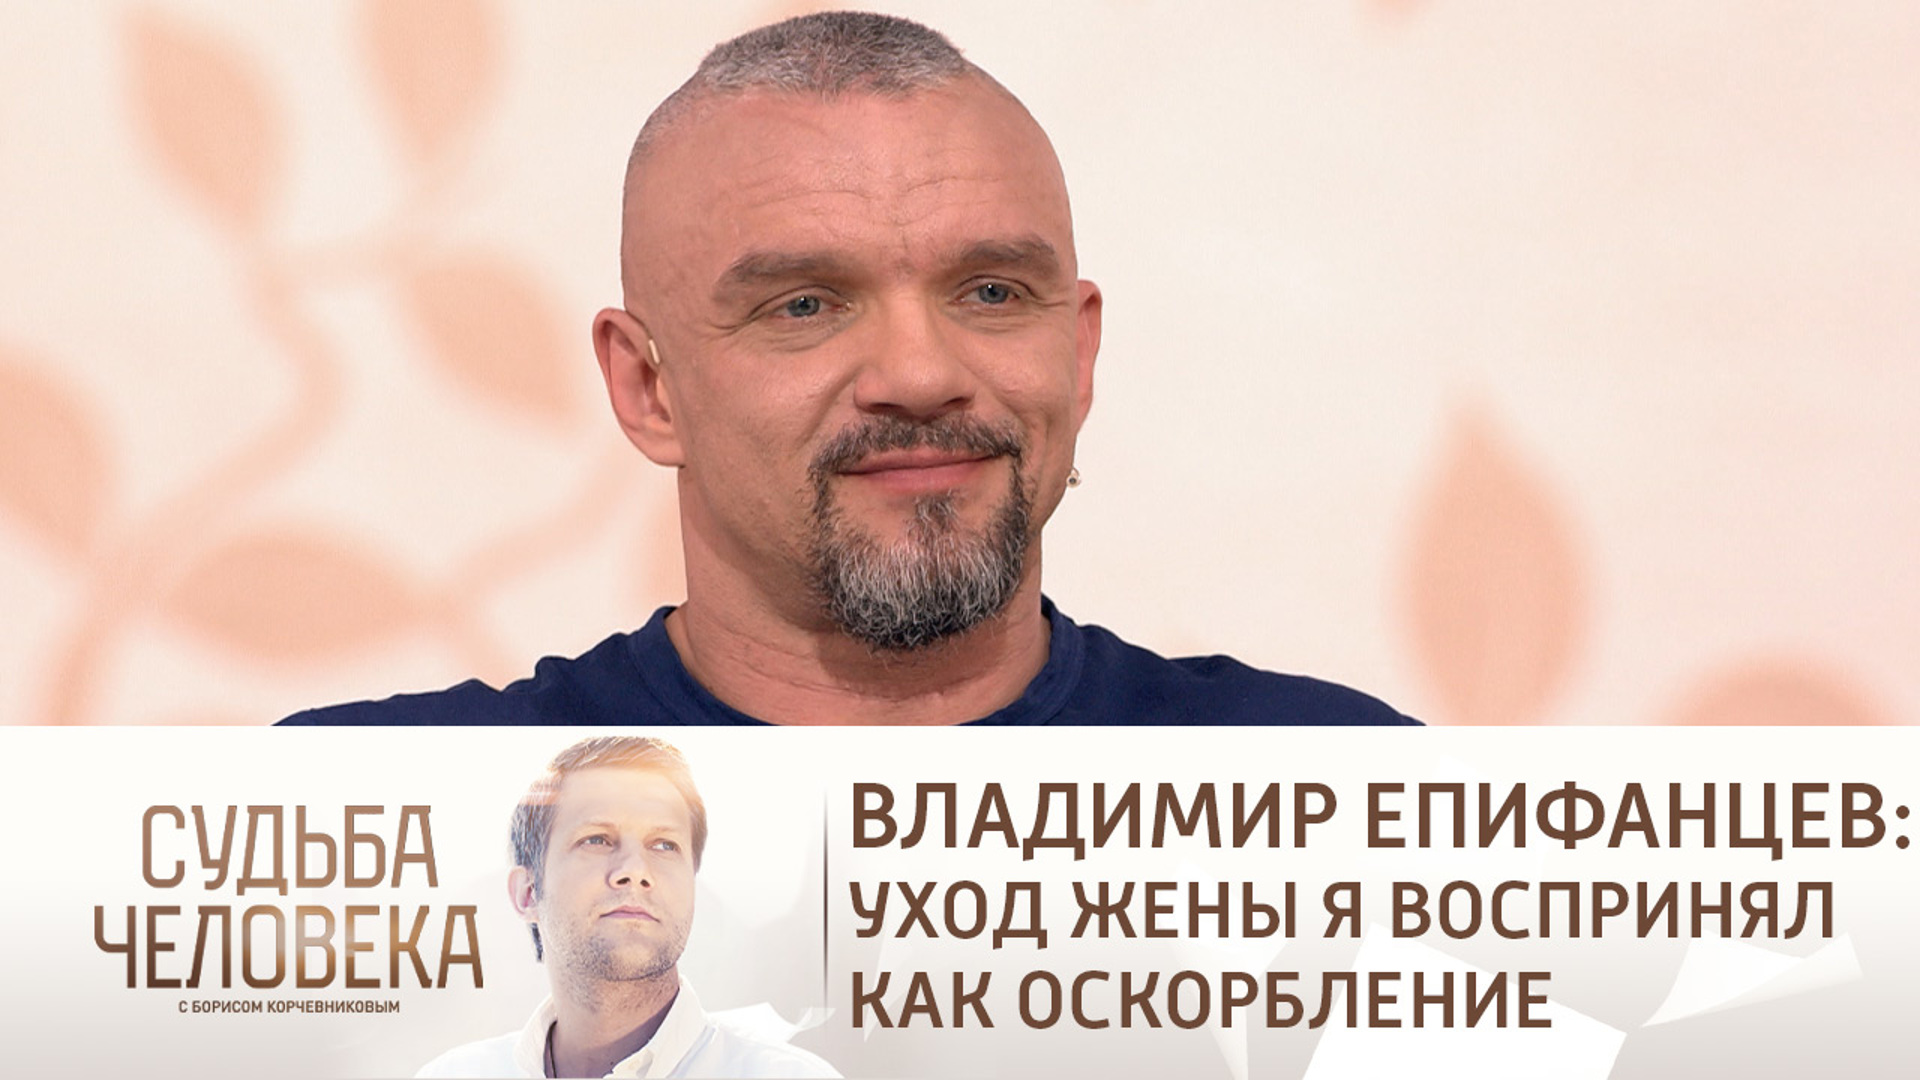 Судьба человека с Борисом Корчевниковым Владимир Епифанцев